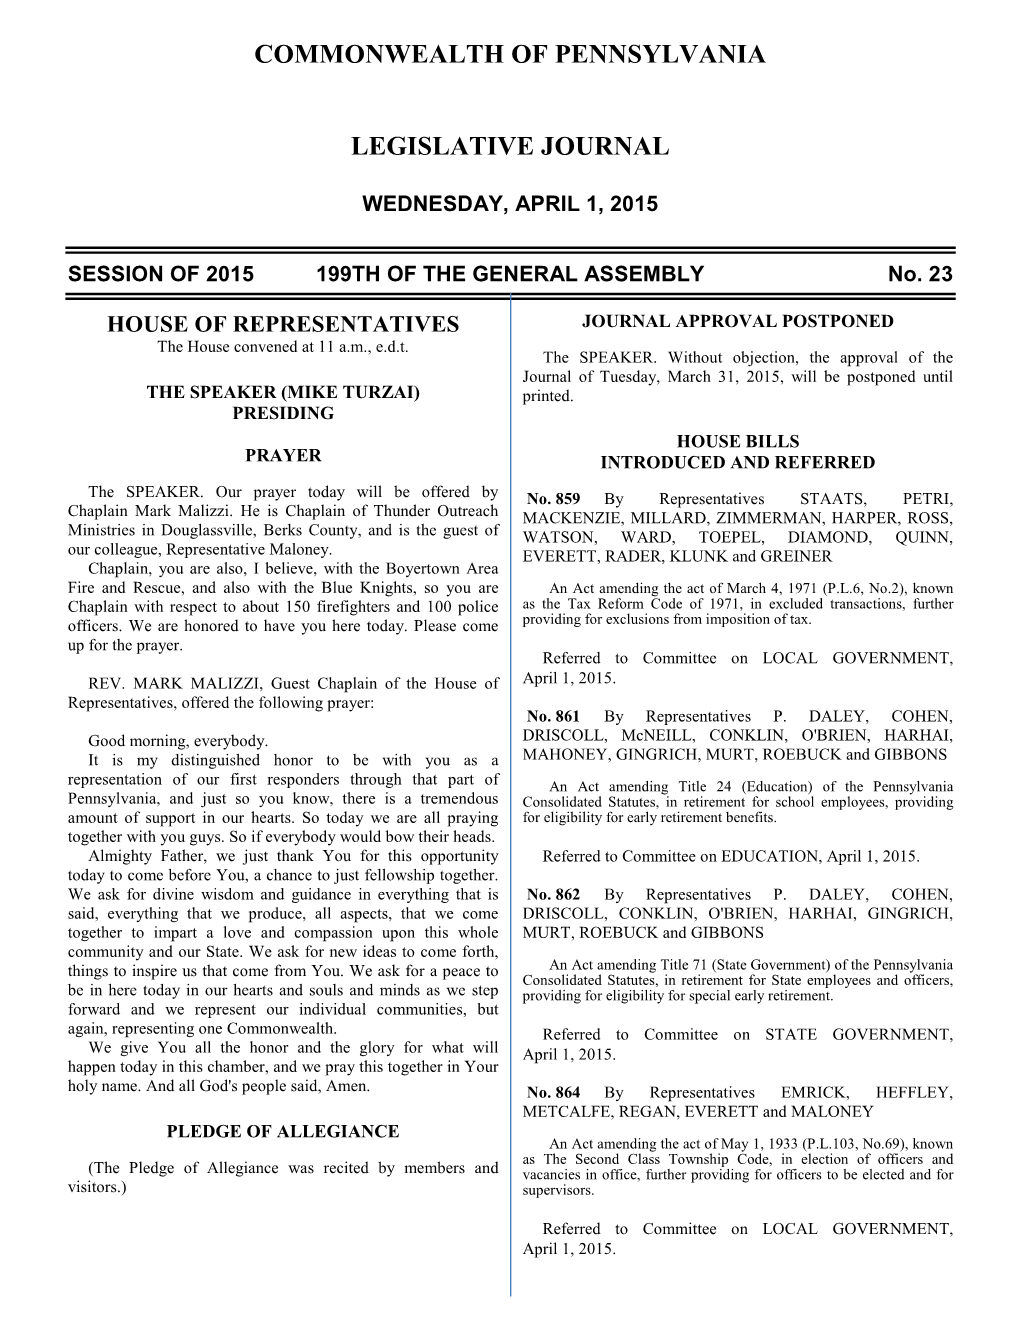 430 Legislative Journal—House April 1